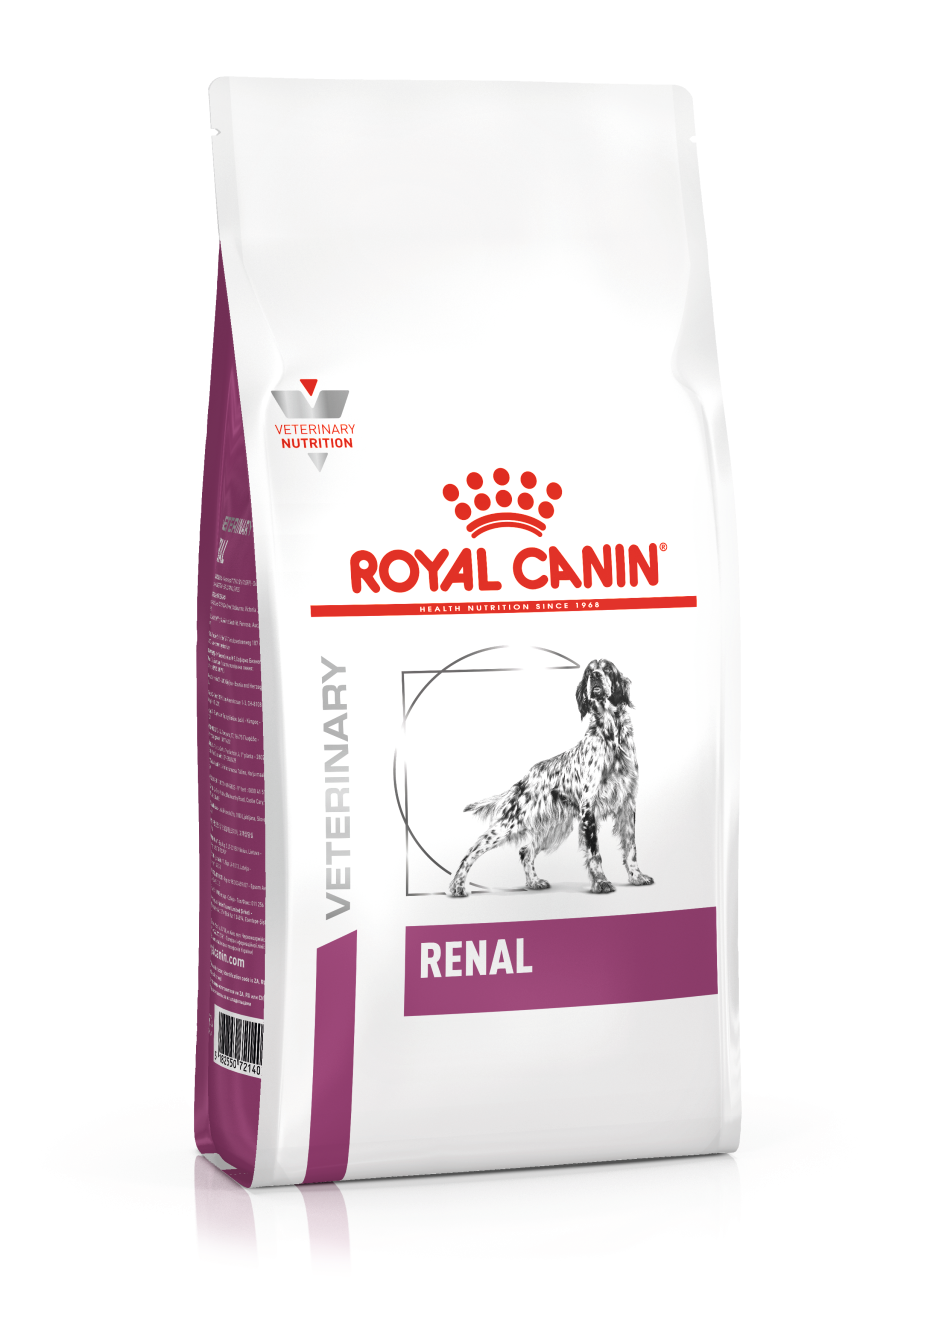 Royal Canin Renal hond __ 2x 14 kg